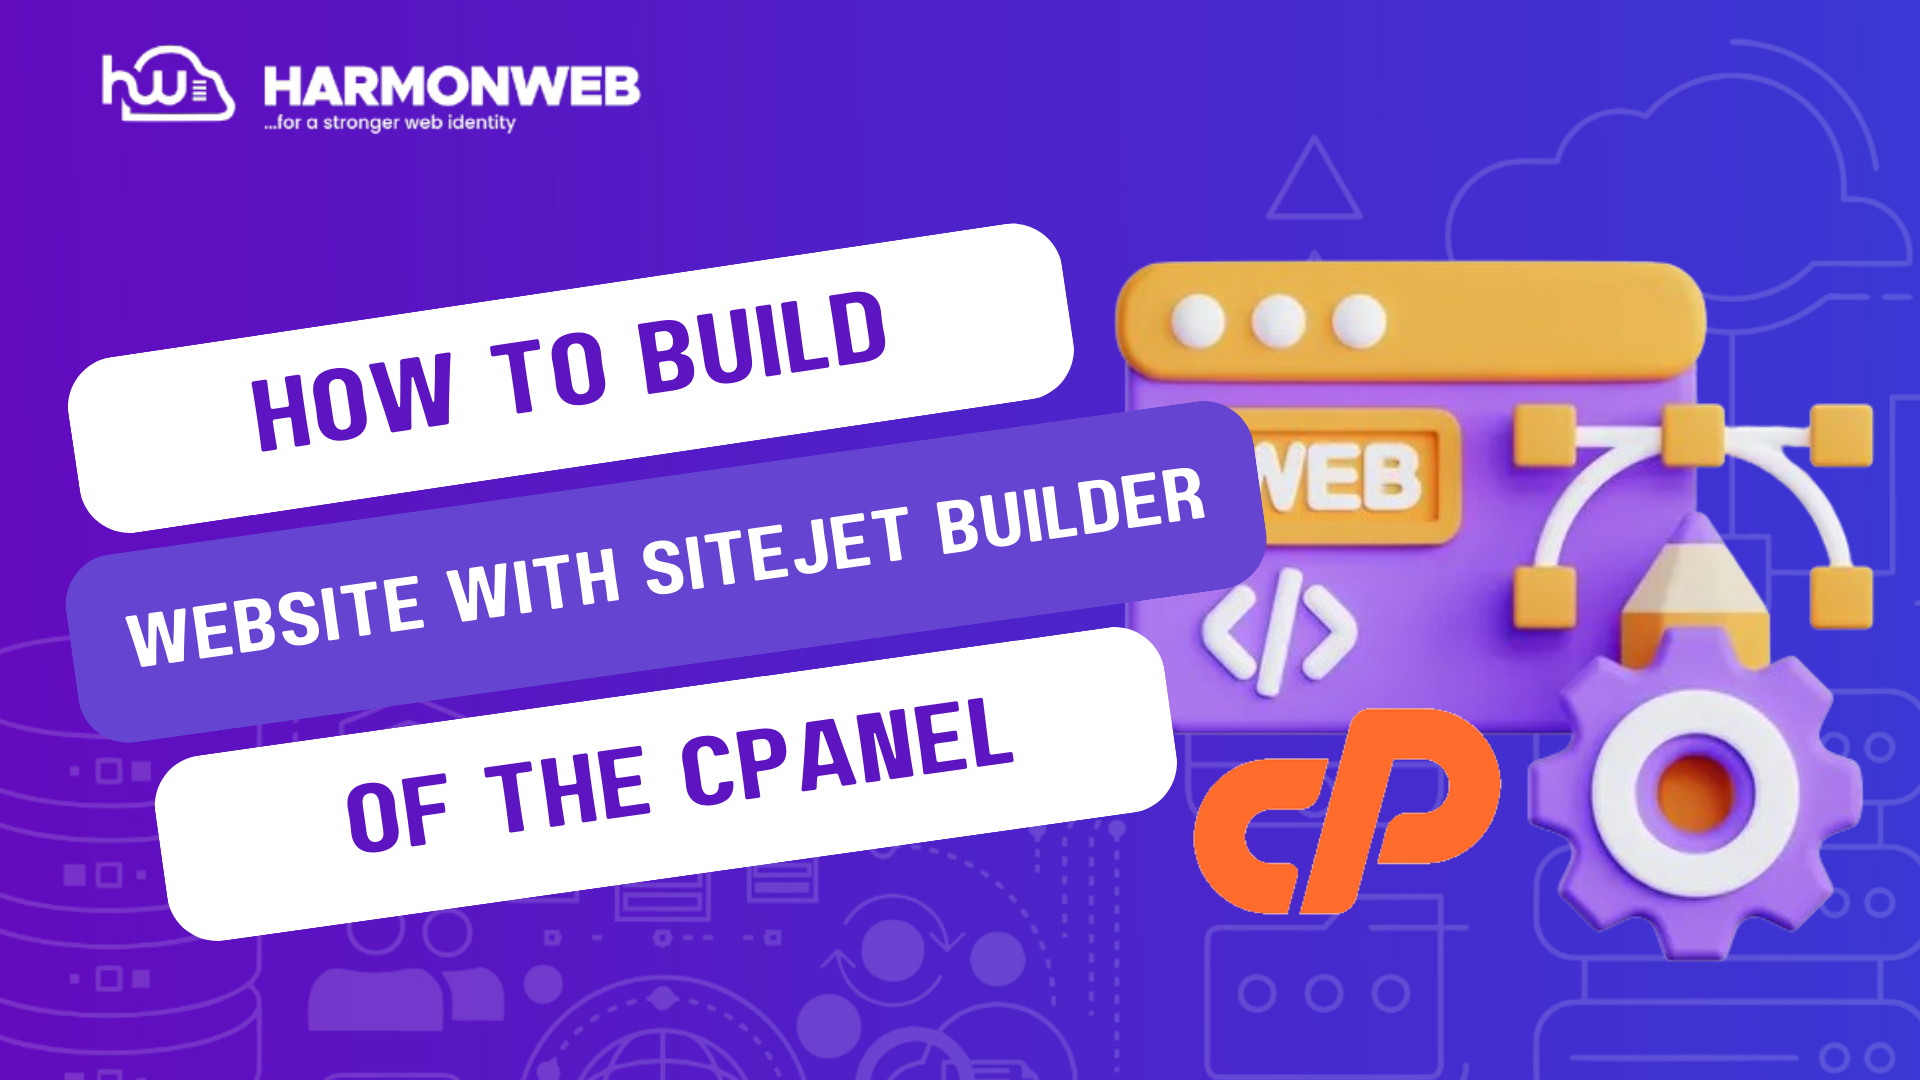 SiteJet Builder in cPanel